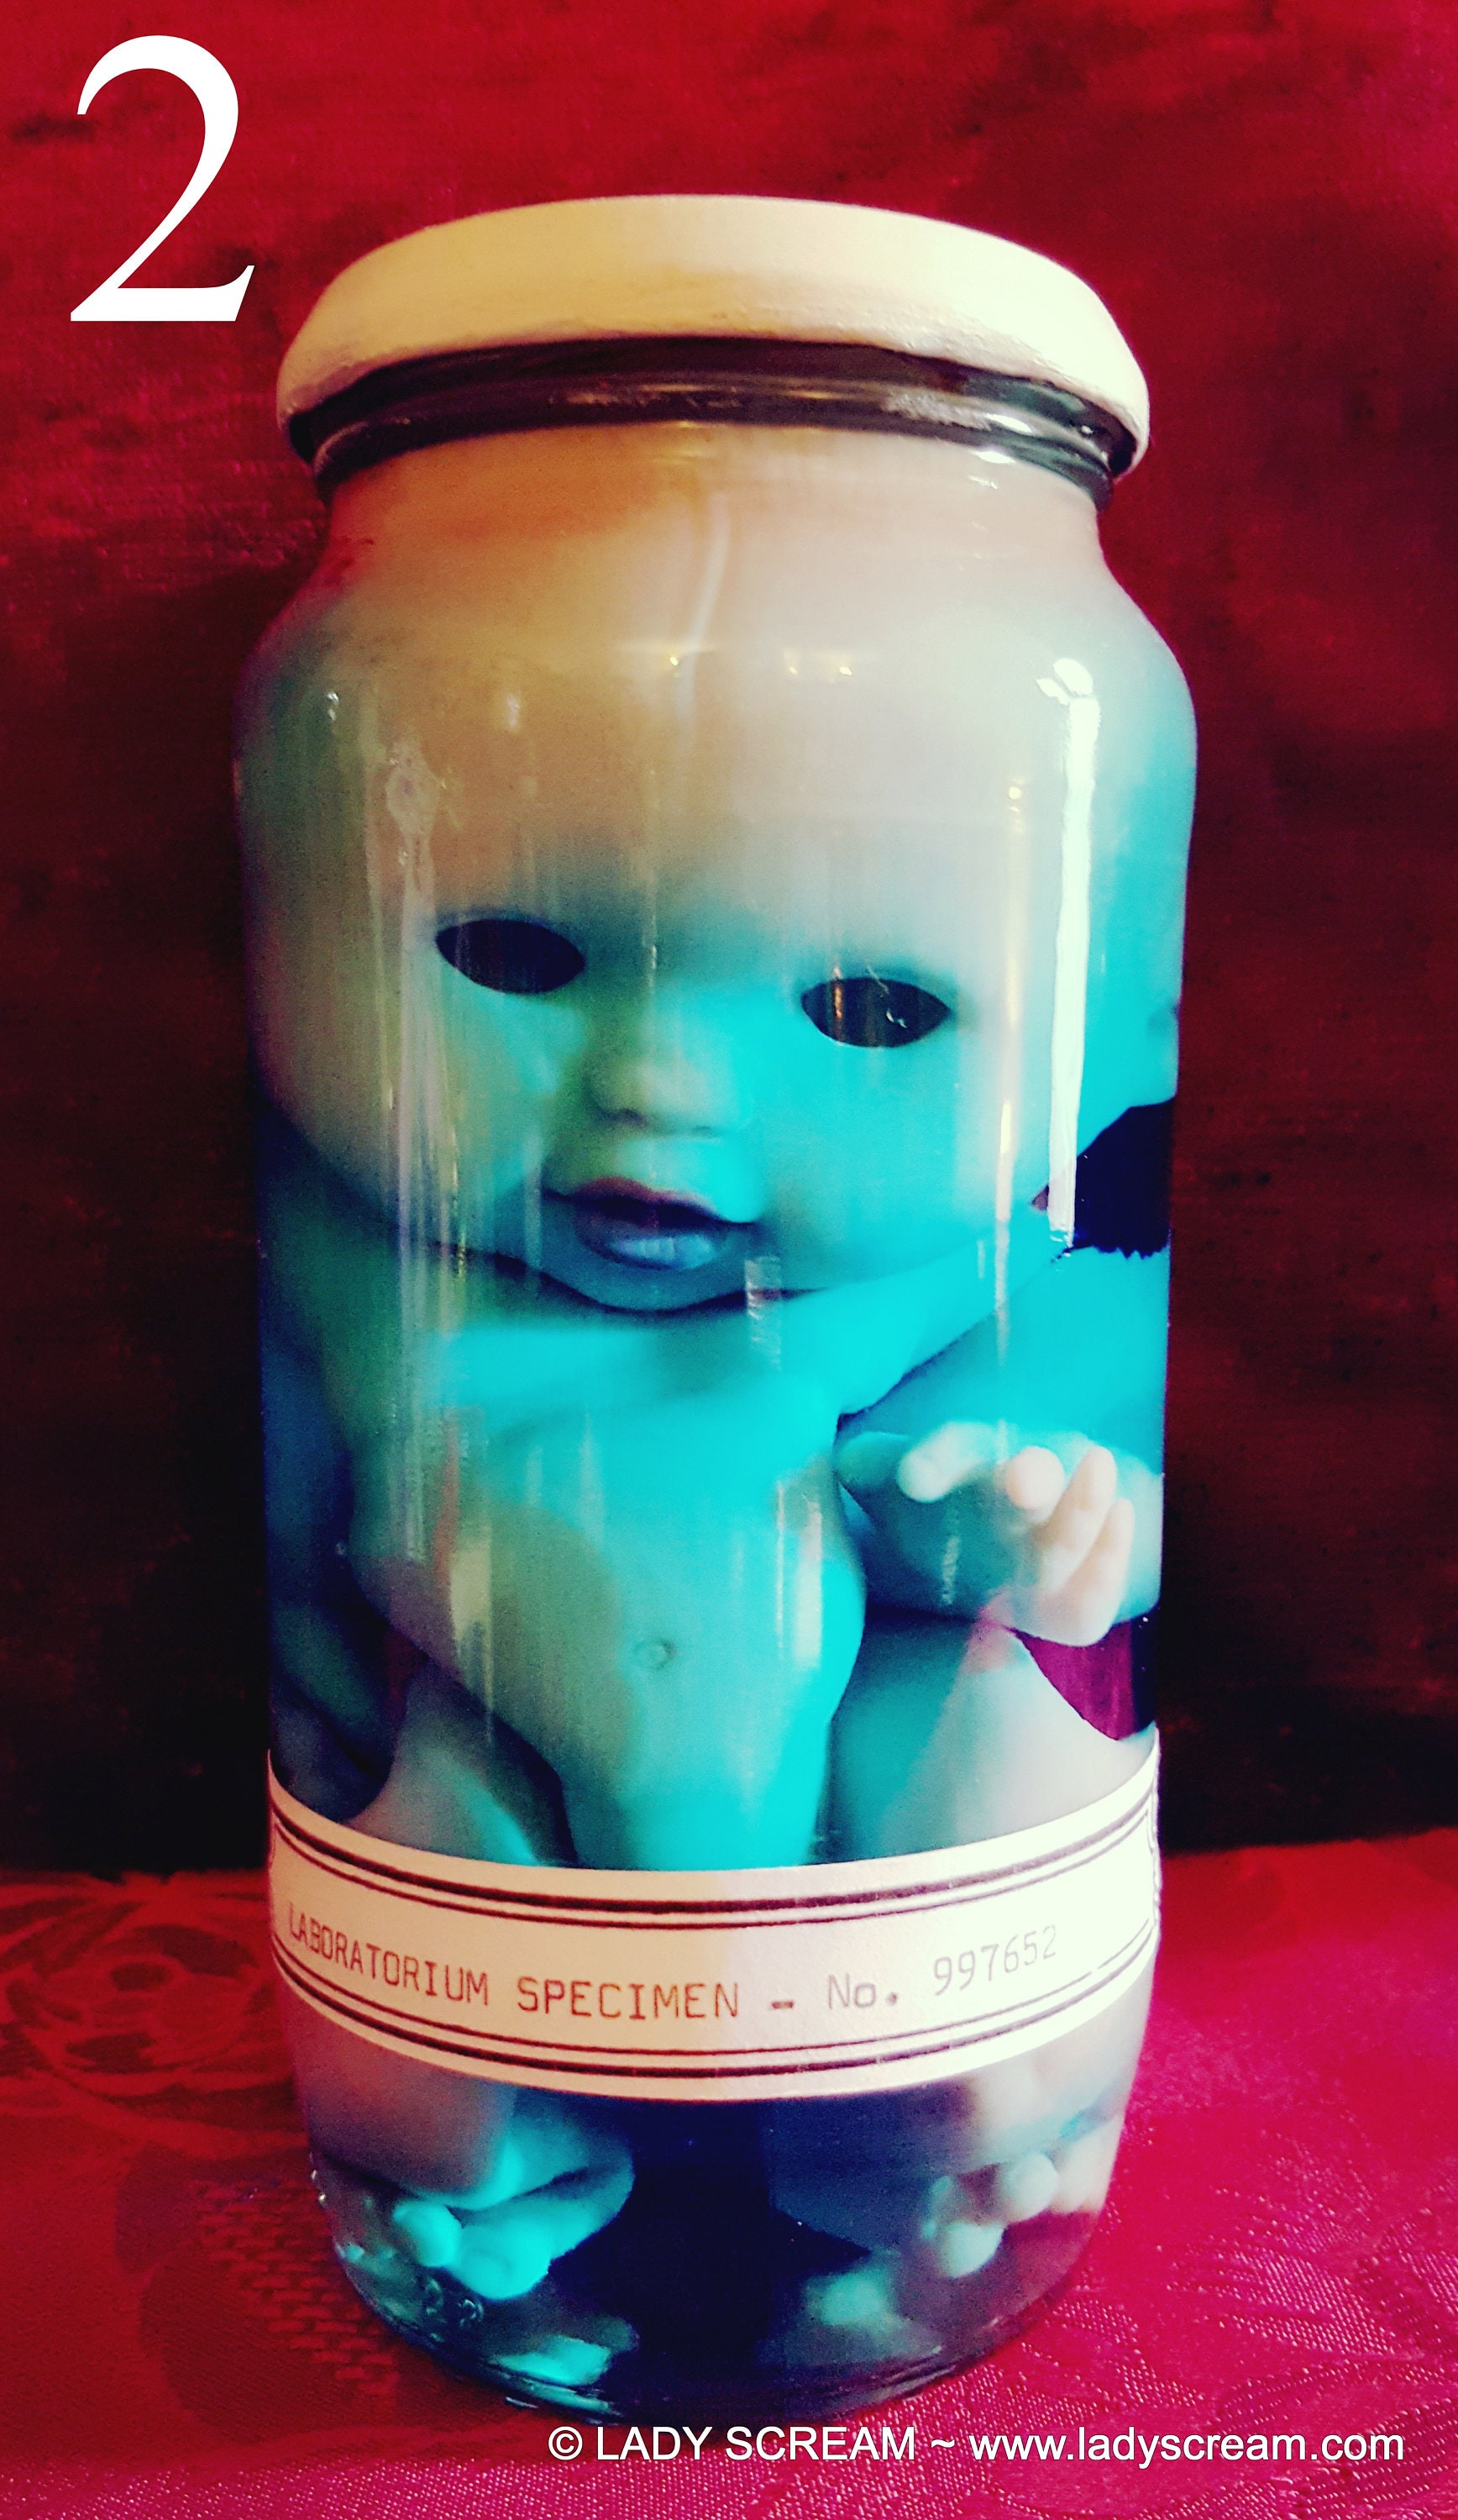 Faux Baby in a Jar Specimen Wet Specimen Lab Jar | Etsy